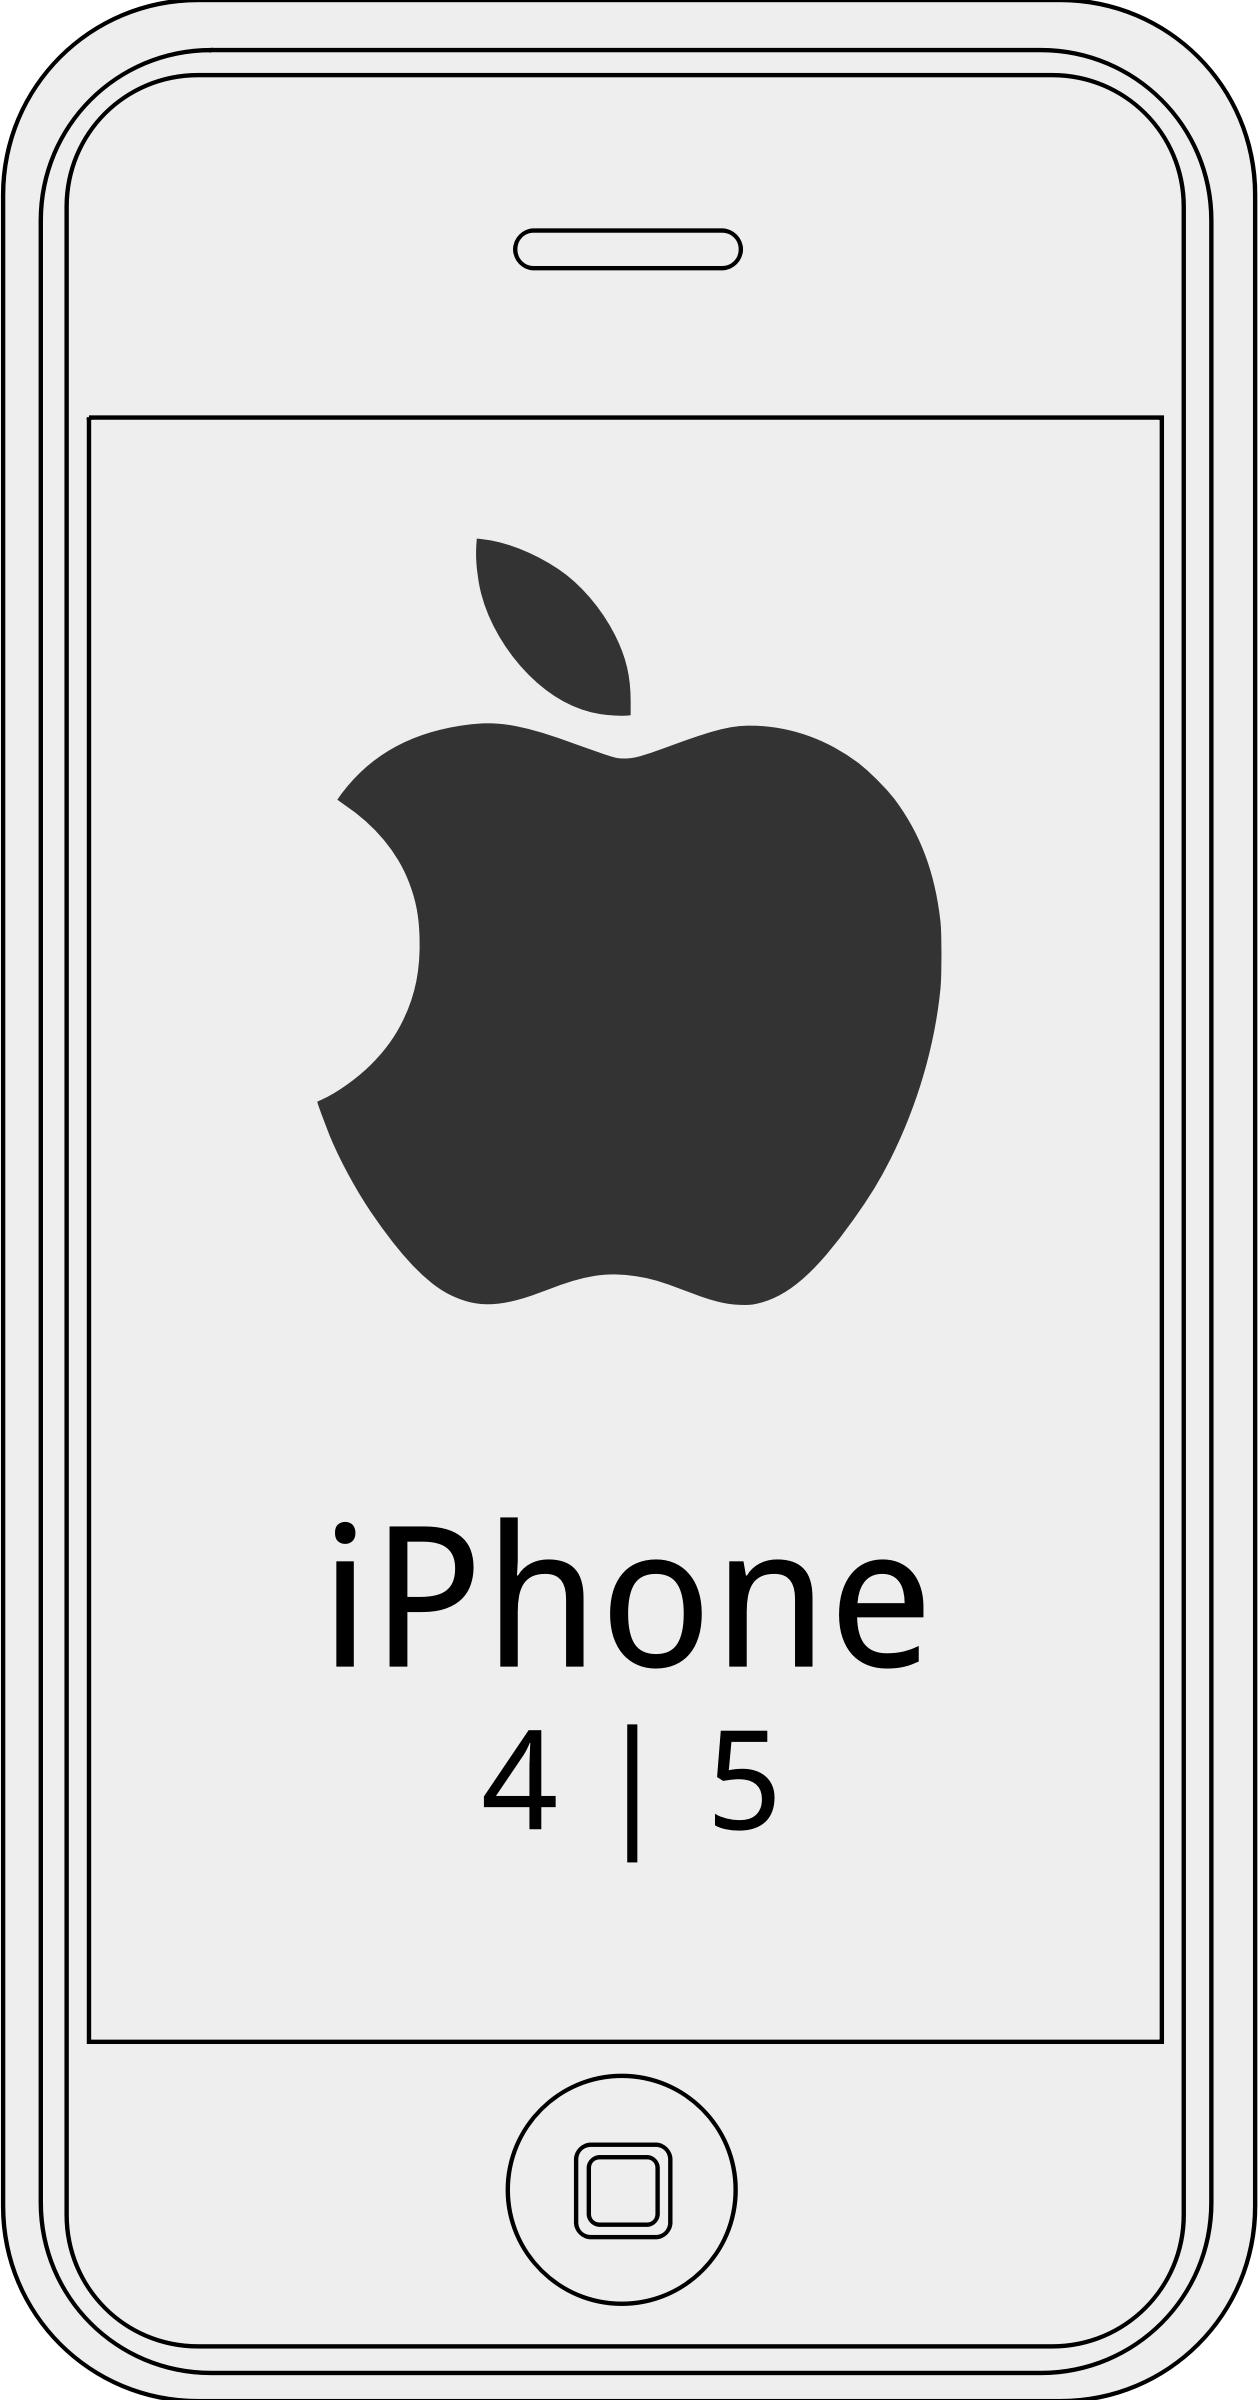 iPhone 4 icons